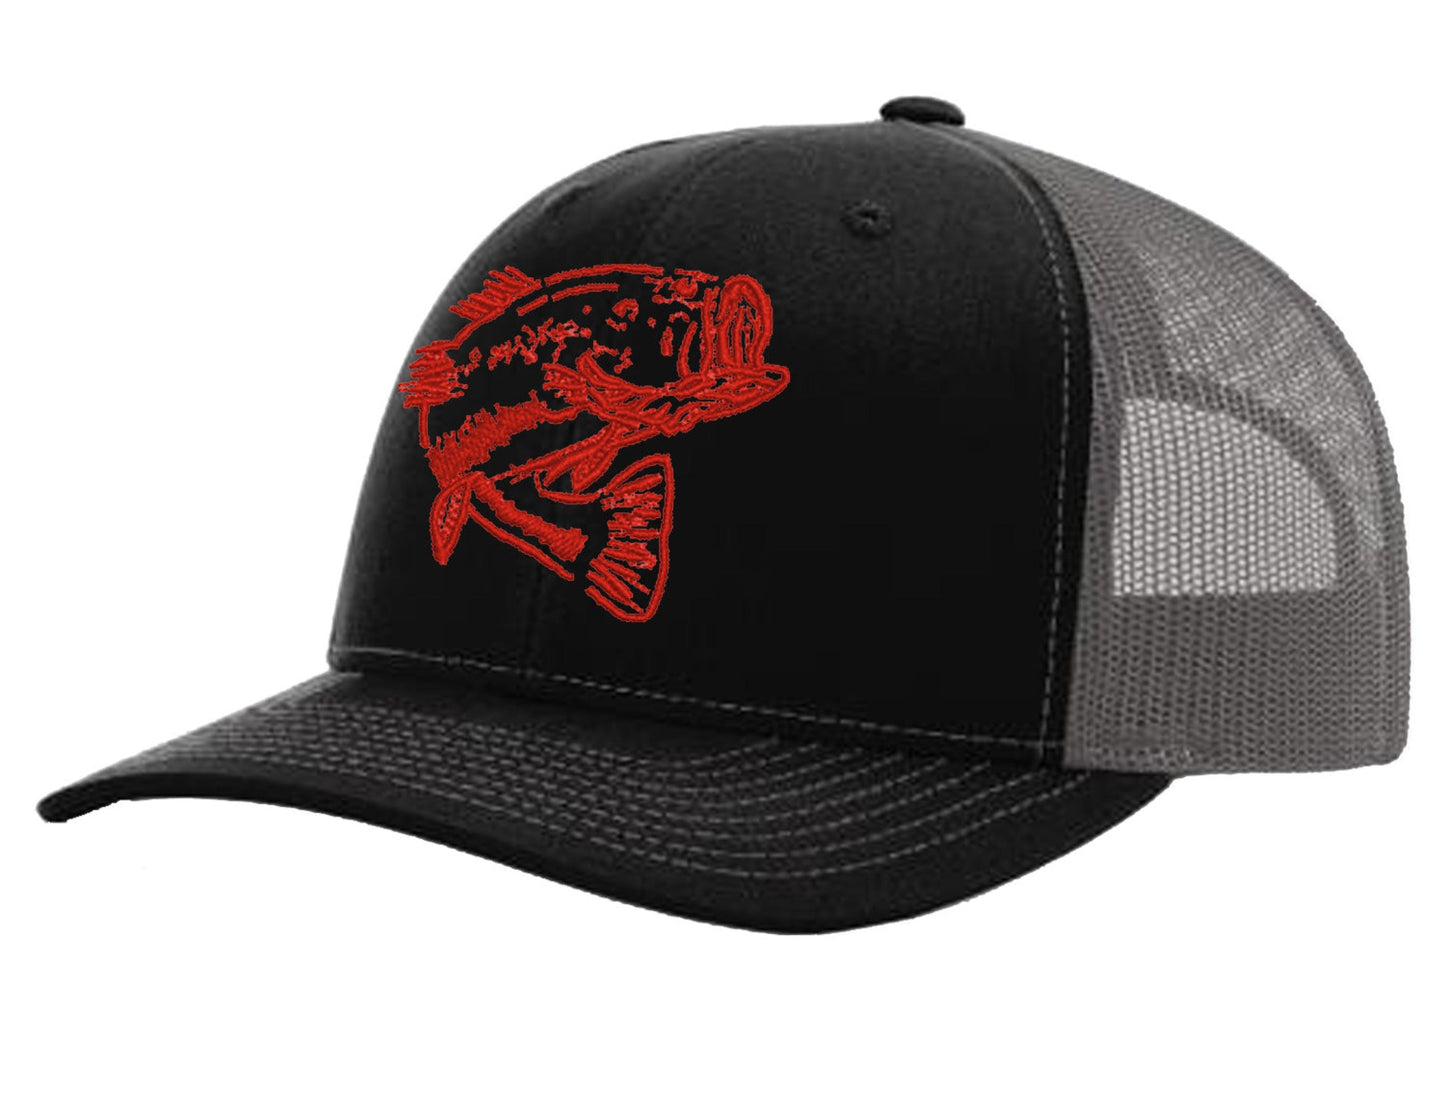 Bass "Reel Hawg" Structured Trucker Hat - Black/Gray Mesh - Red Bass logo